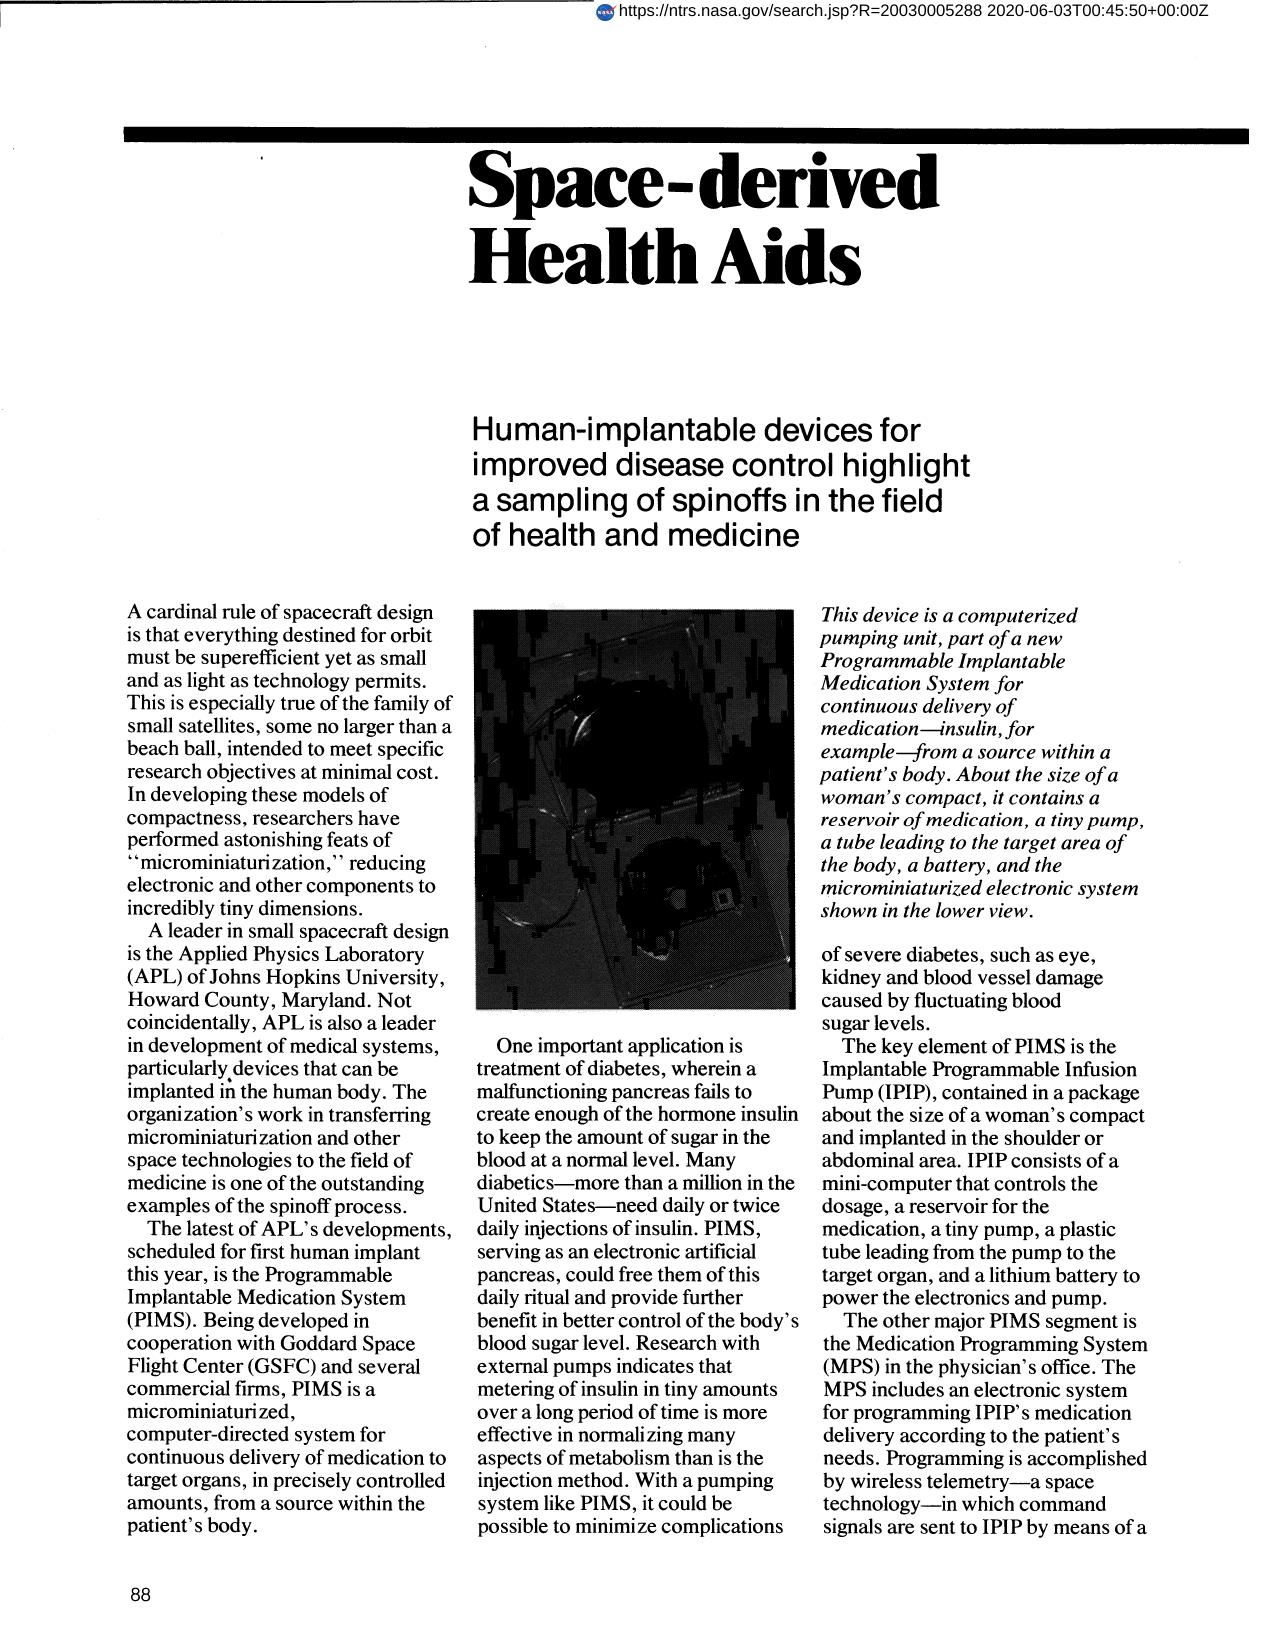 Space Derived Health Aids (AID, Heart Monitor)